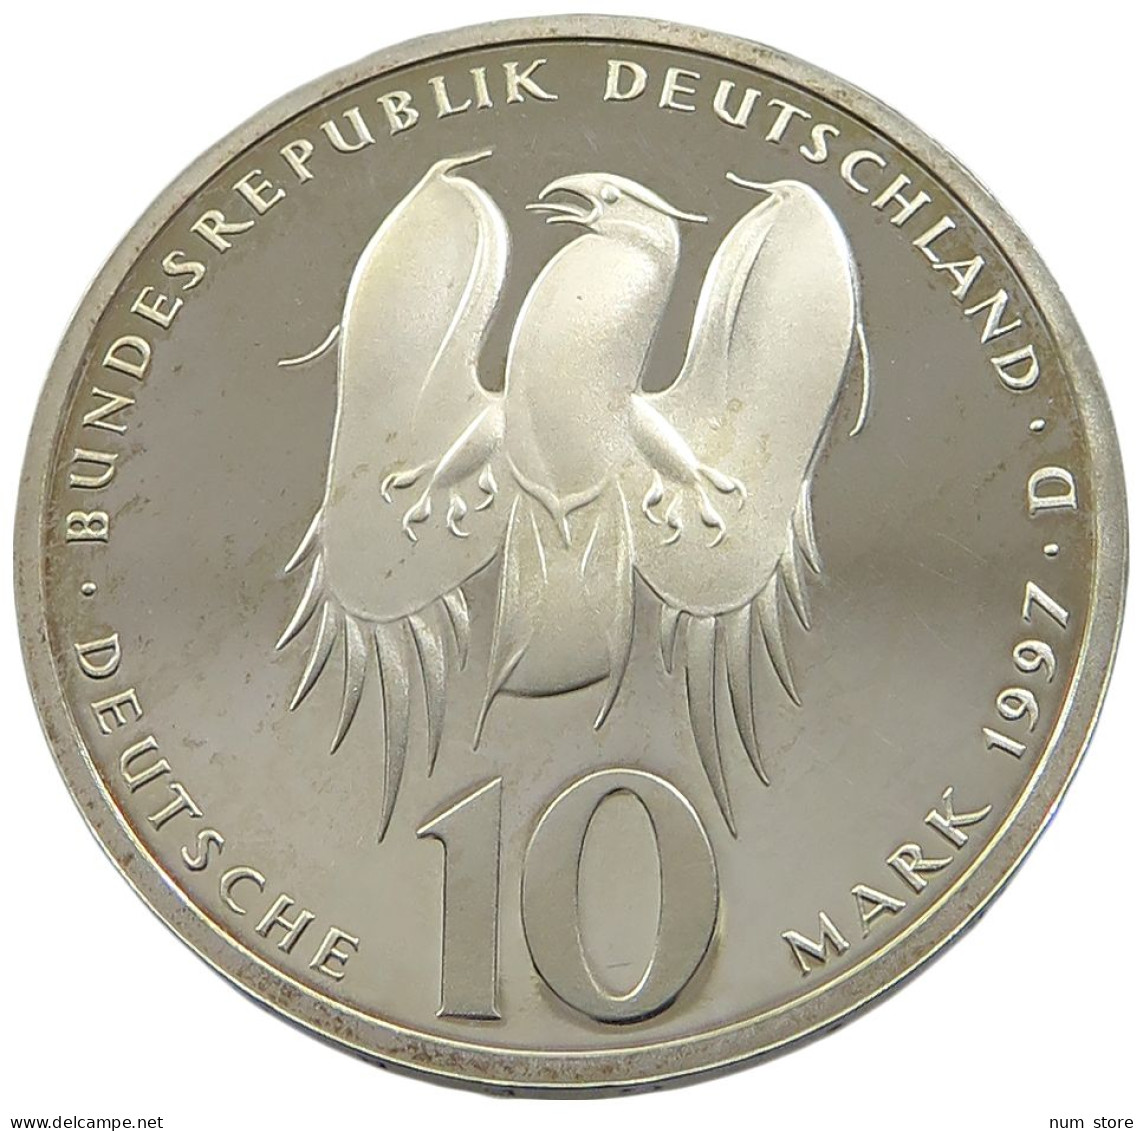 GERMANY BRD 10 MARK 1997 D PROOF #sm14 1017 - 10 Mark